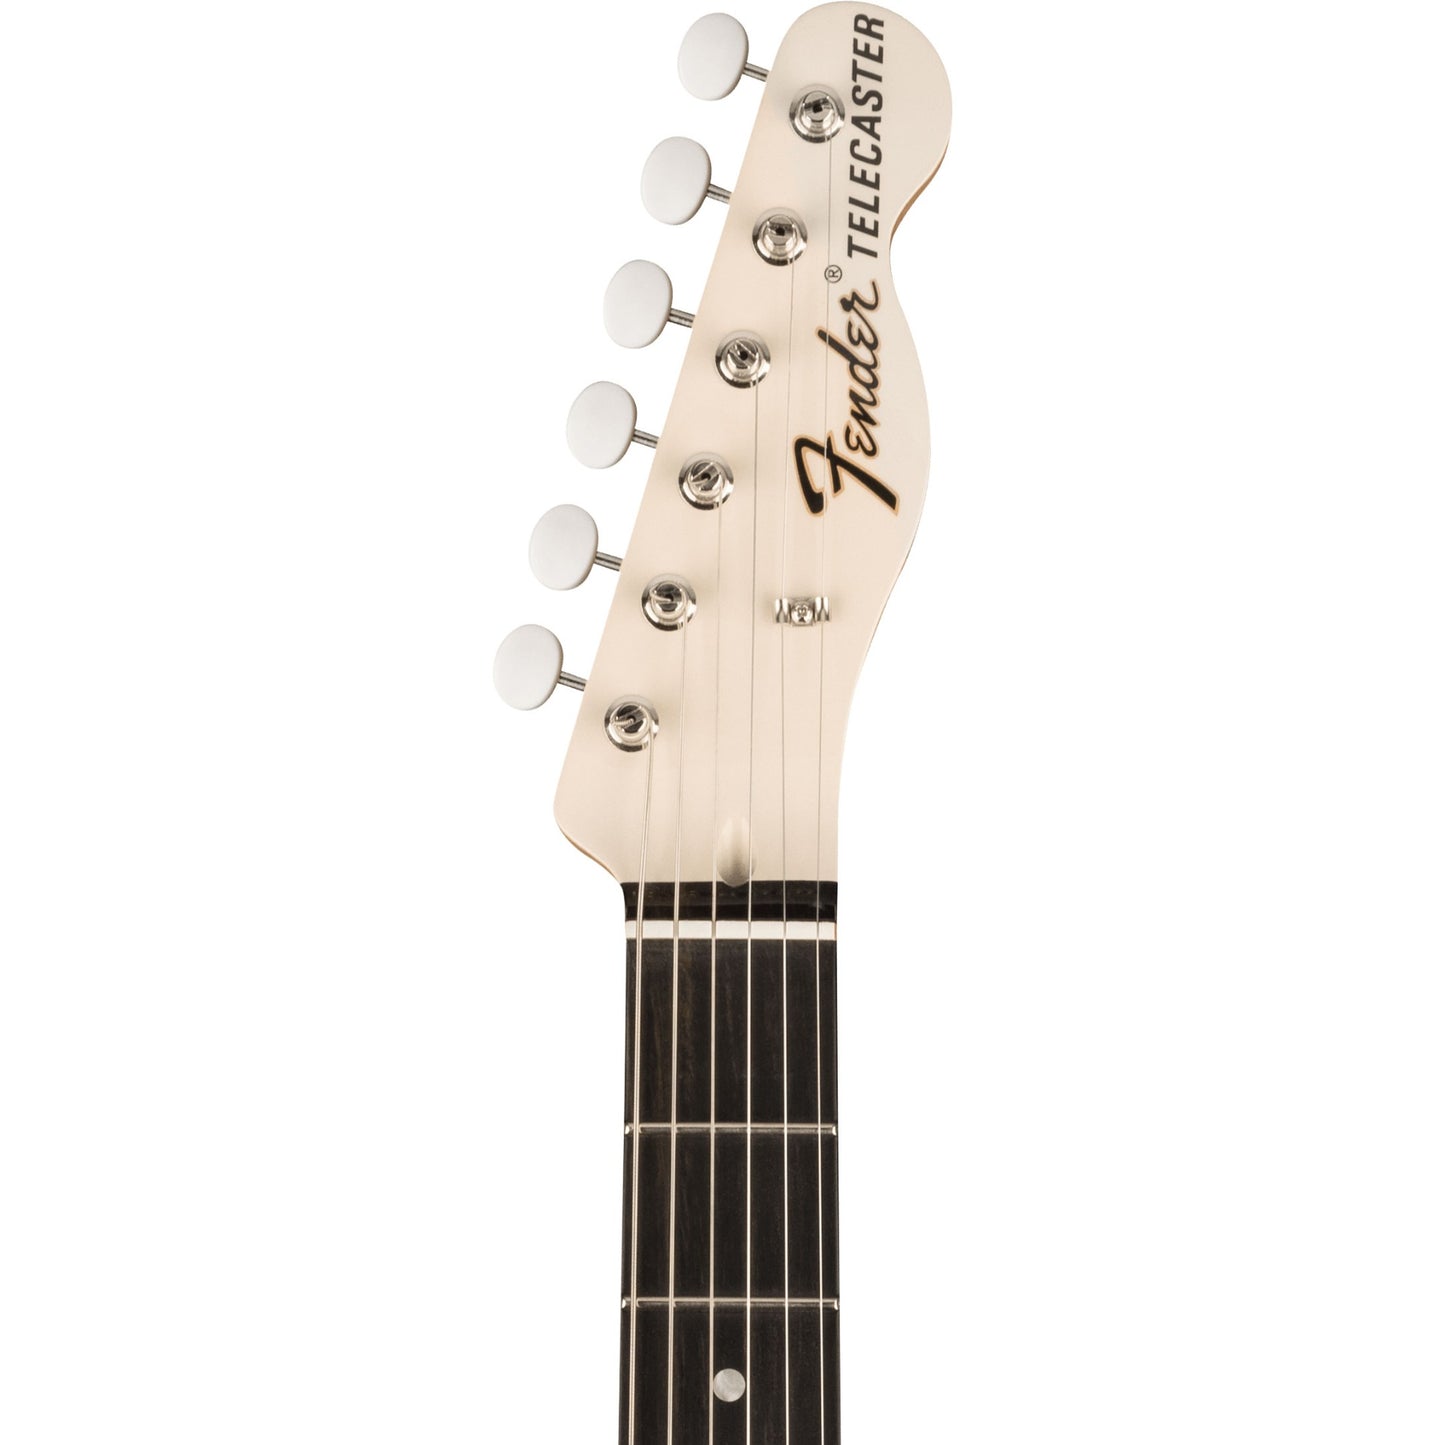 Fender Gold Foil Telecaster® Electric Guitar, White Blonde